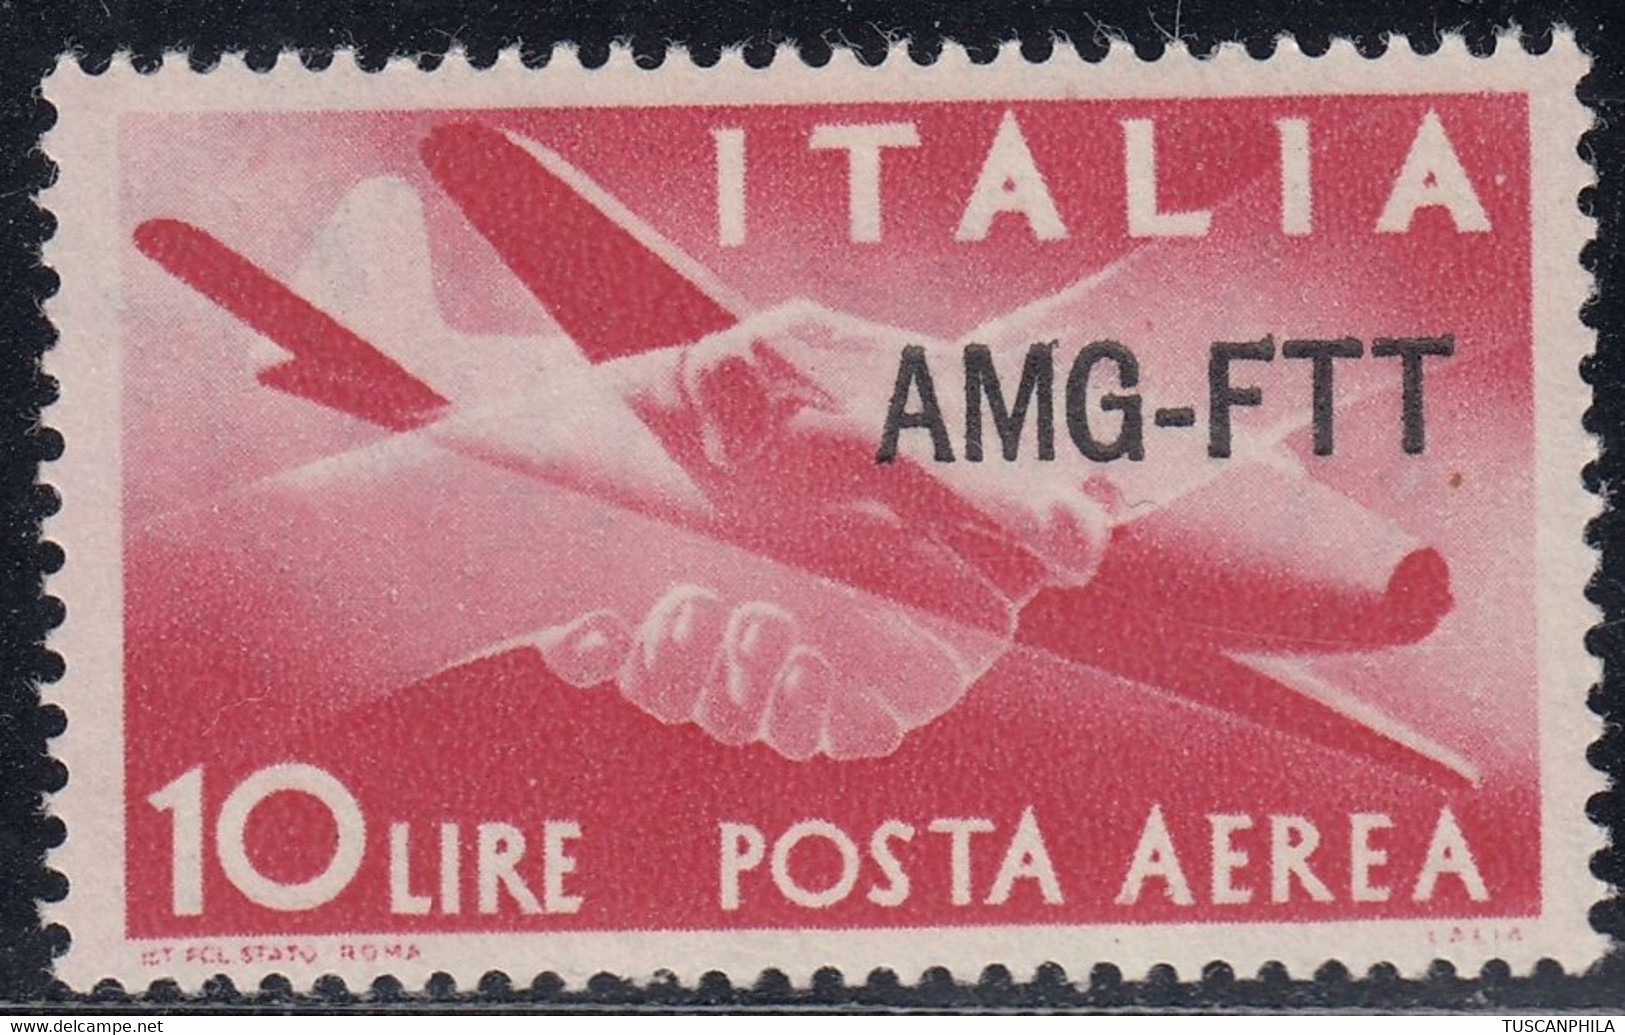 Trieste AMG-FTT Posta Aerea Varietà Decalco Sass. A20h MNH** Cv. 12 - Posta Aerea